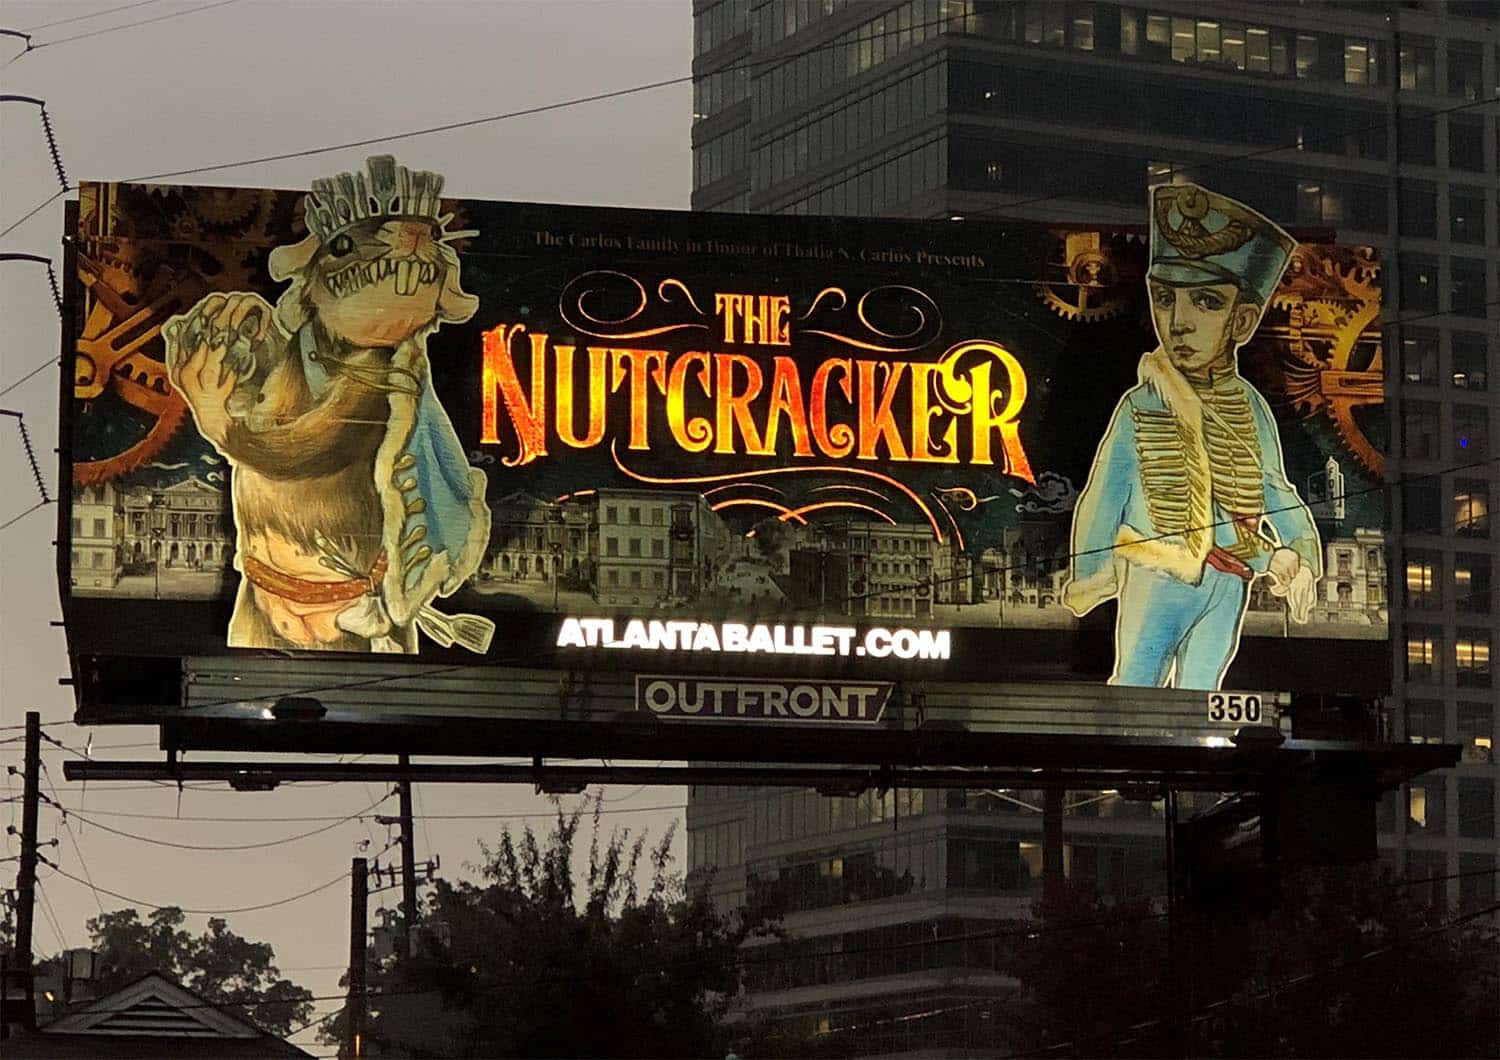 Nutcracker Nutcracker Dual-Lit during at Night